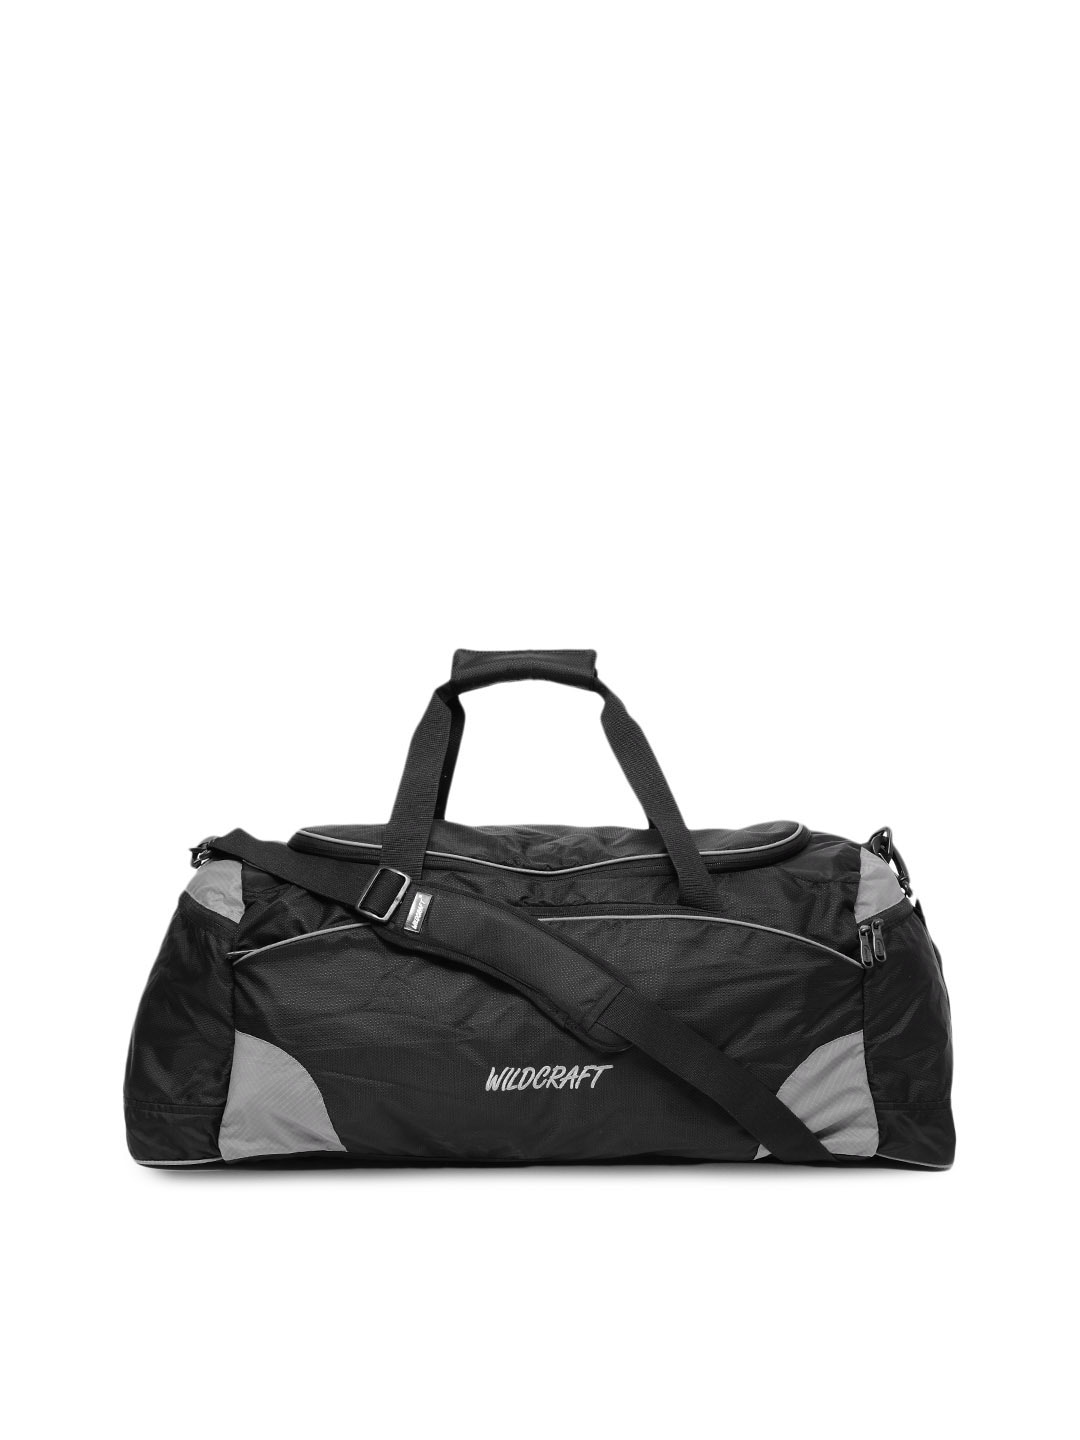 Wildcraft Unisex Black Duffel Bag